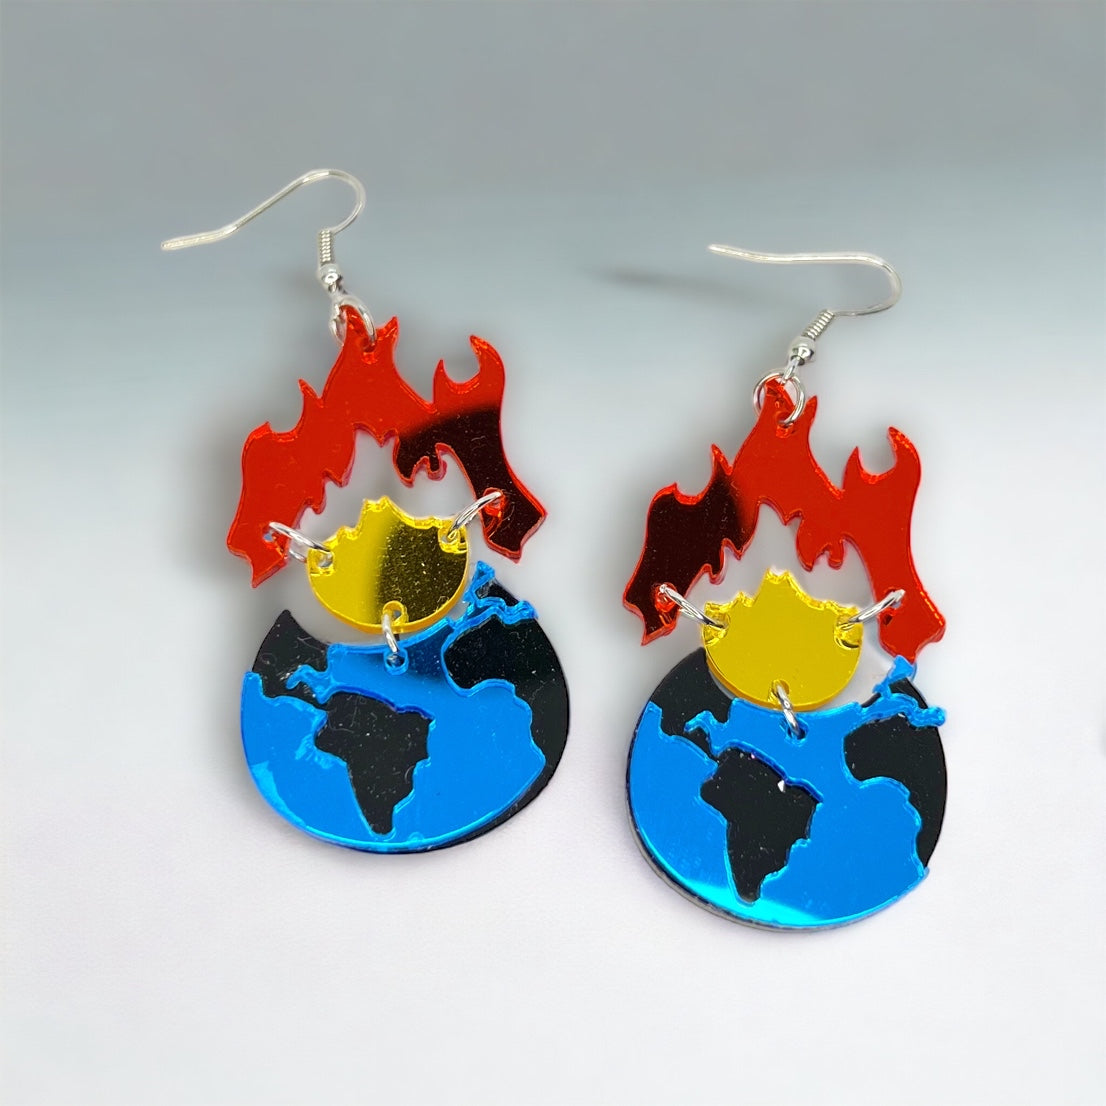 “Save Our Earth” Earrings - You da Bomb, Fun Jewelry, Explosive, Dangle Earrings, Climate Control Jewelry